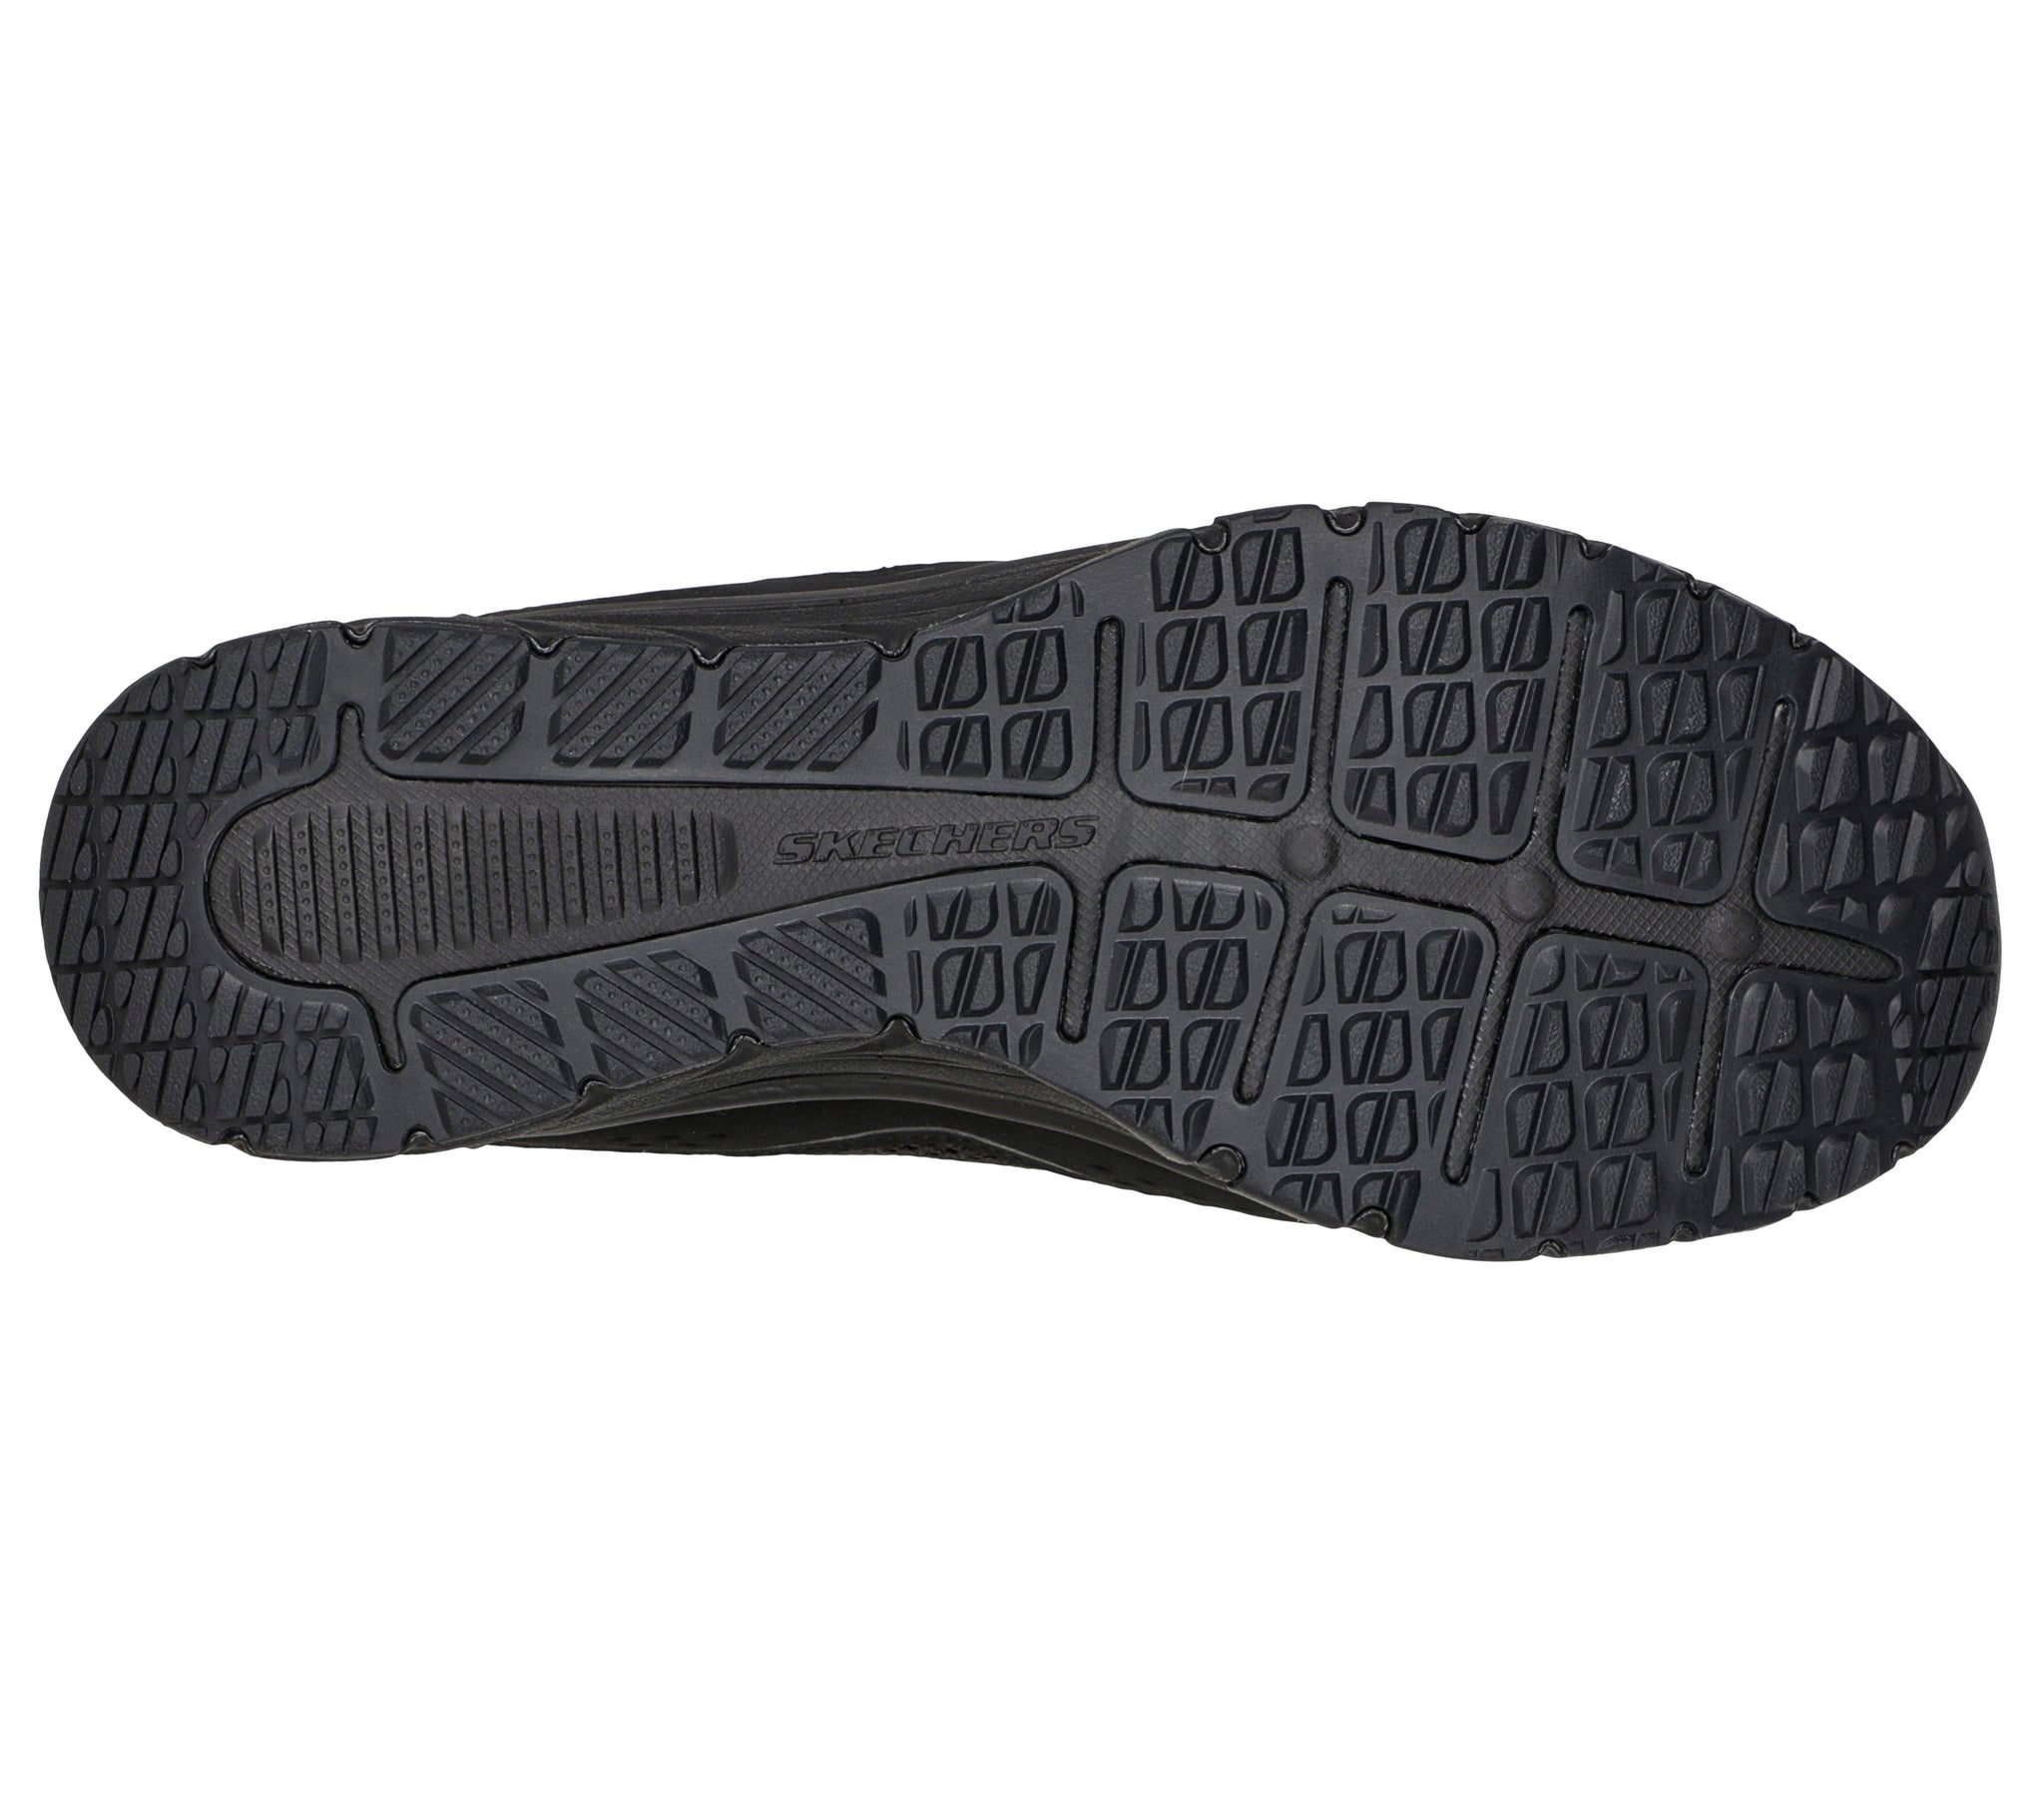 104282 - GRATIS SPORT - Shoess